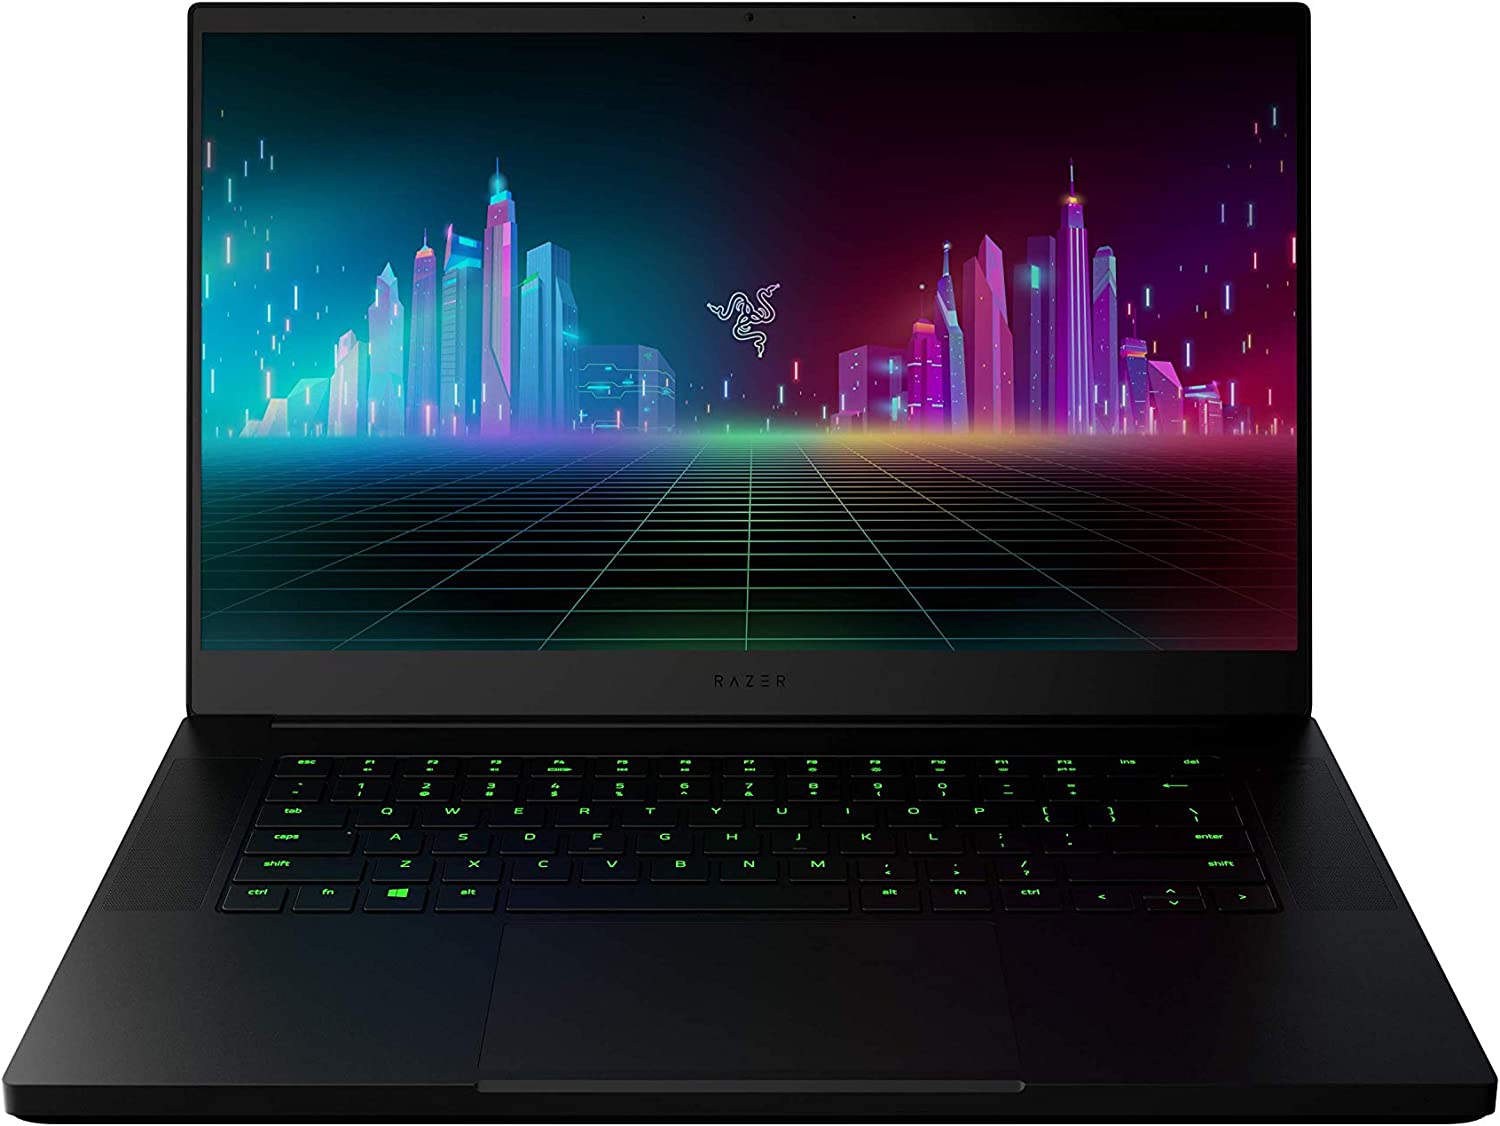 Amazon.com: Razer Blade 15 Base Gaming Laptop 2020: Intel Core i7-10750H  6-Core, NVIDIA GeForce GTX 1660 Ti, 15.6" FHD 1080p 120Hz, 16GB RAM, 256GB  SSD, CNC Aluminum, Chroma RGB Lighting, Black,Windows 10